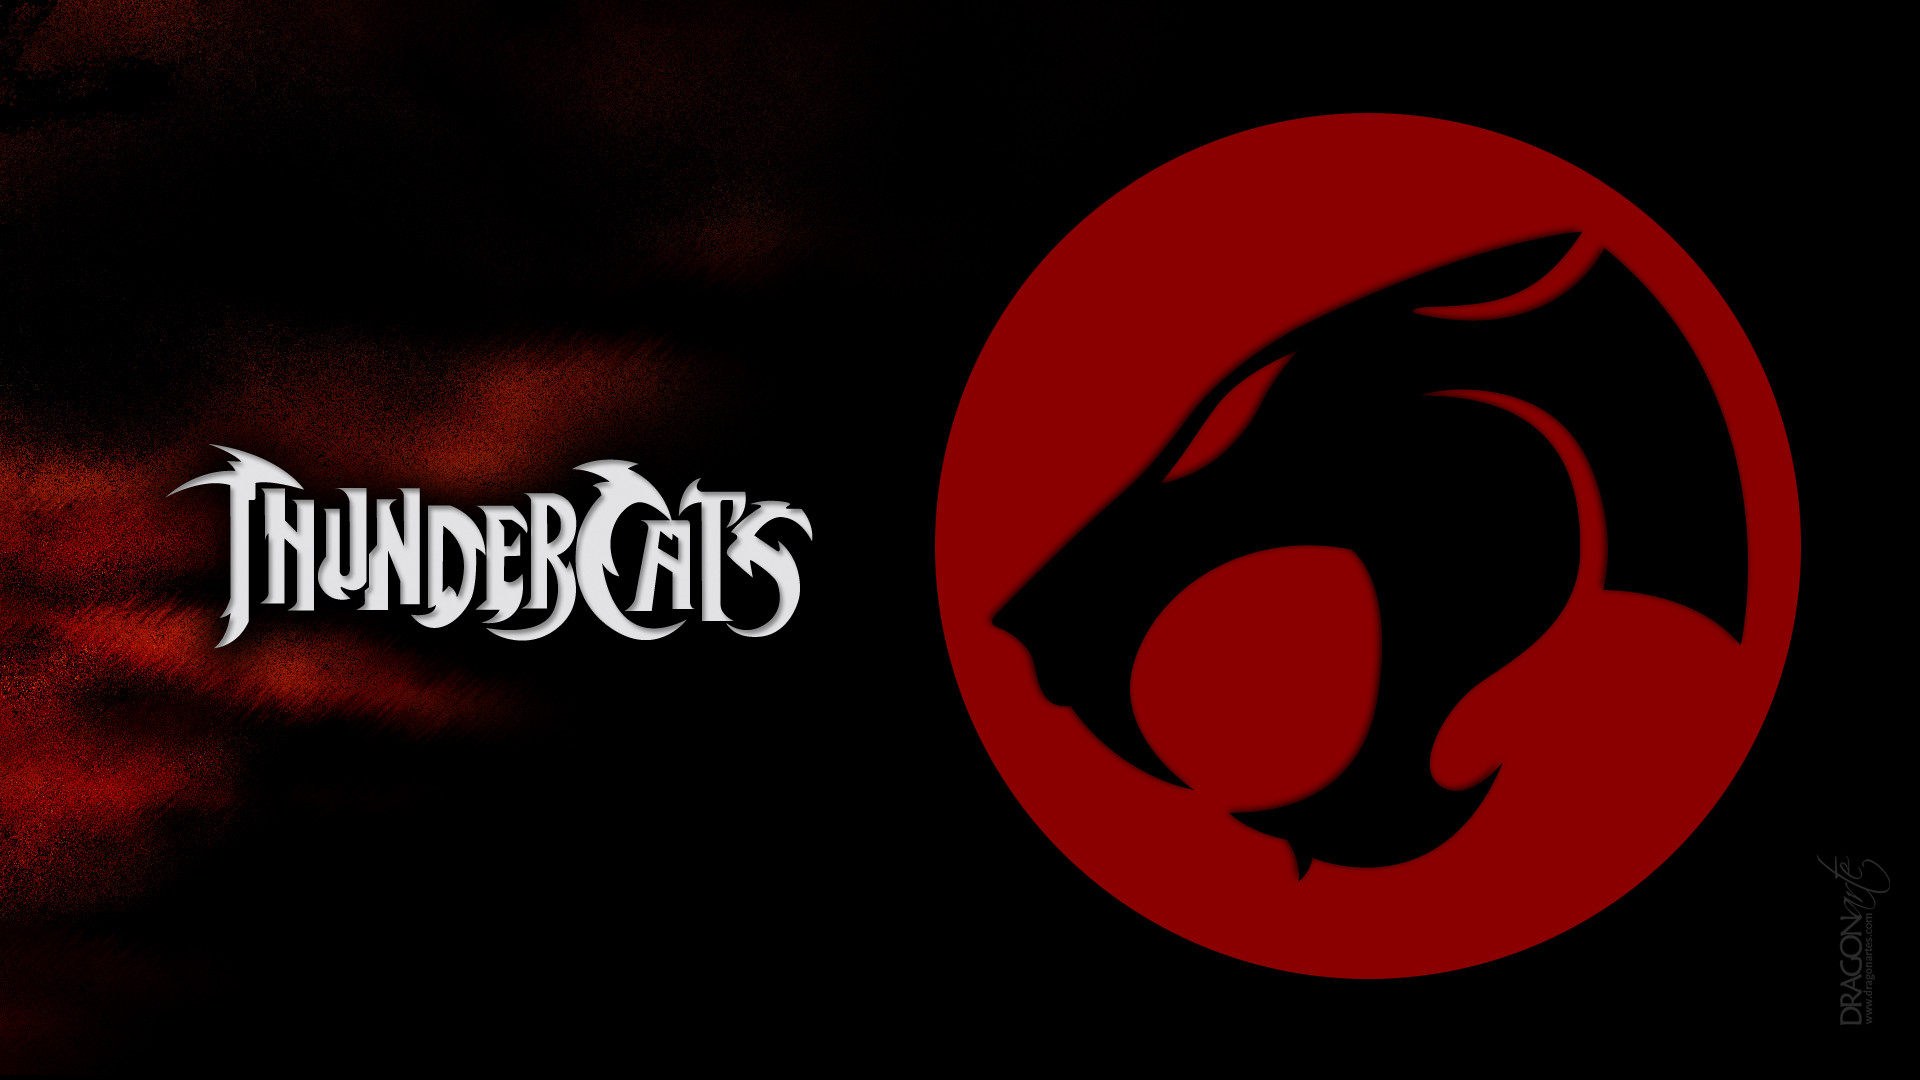 Thundercats Logo Wallpaper (61+ images)